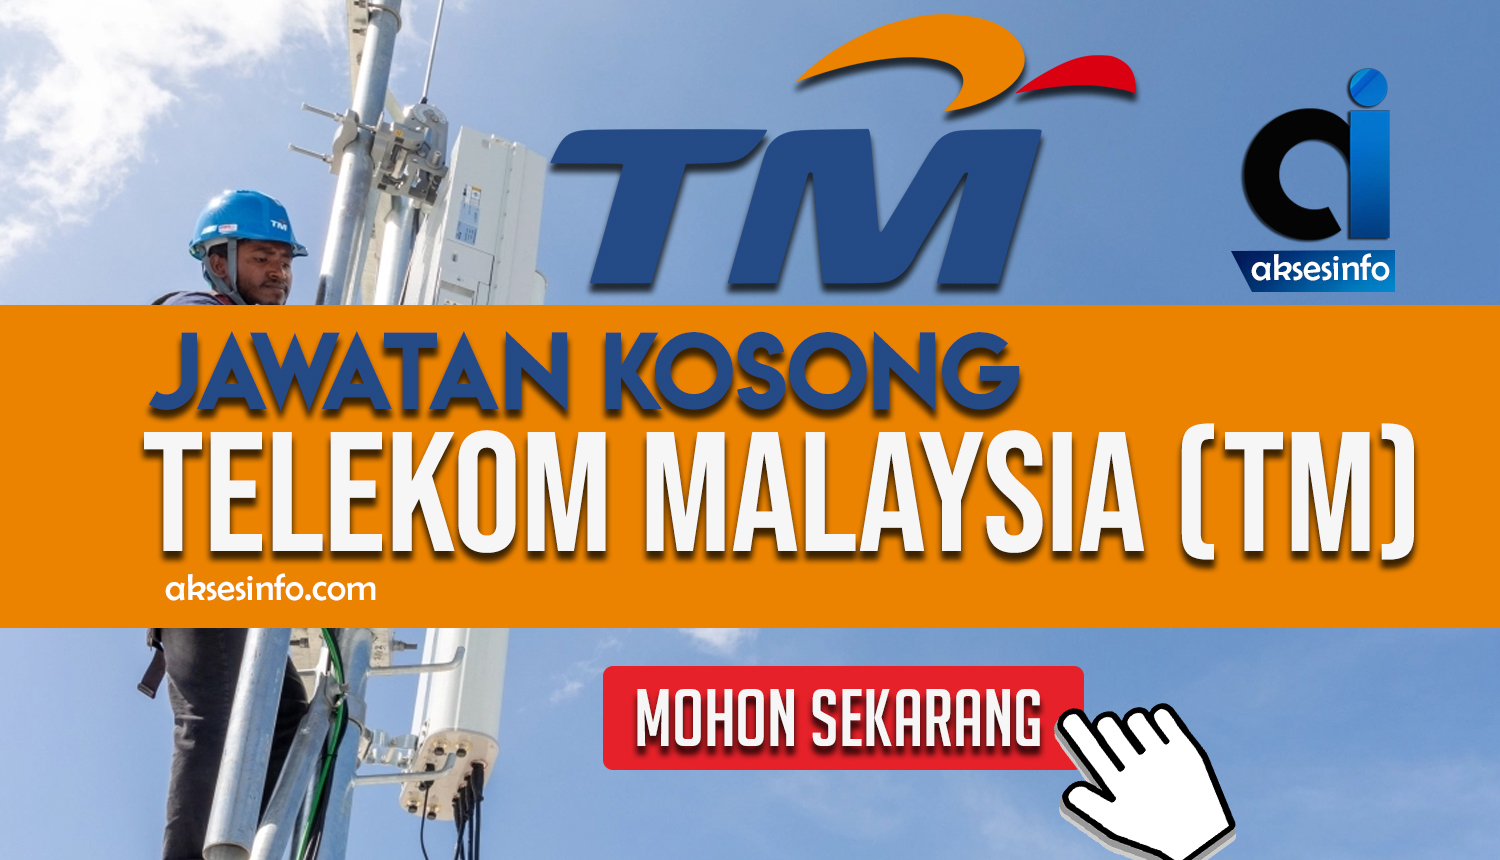  JAWATAN KOSONG  TELEKOM MALAYSIA TM 2022 AksesInfo